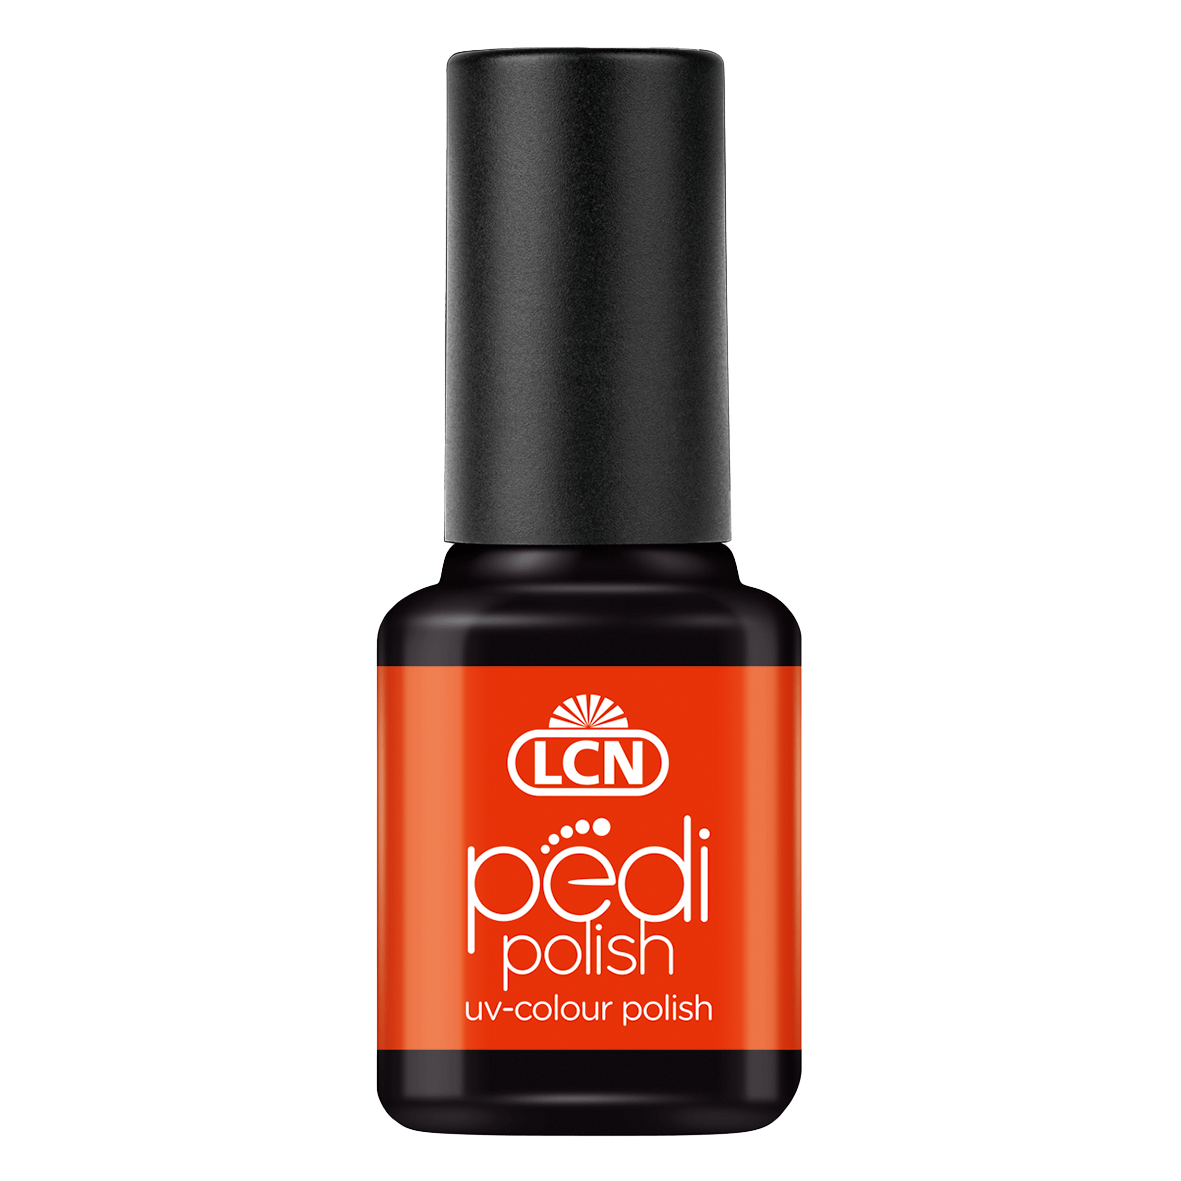 LCN - Pedi Polish UV-Colour Polish, 8 ml